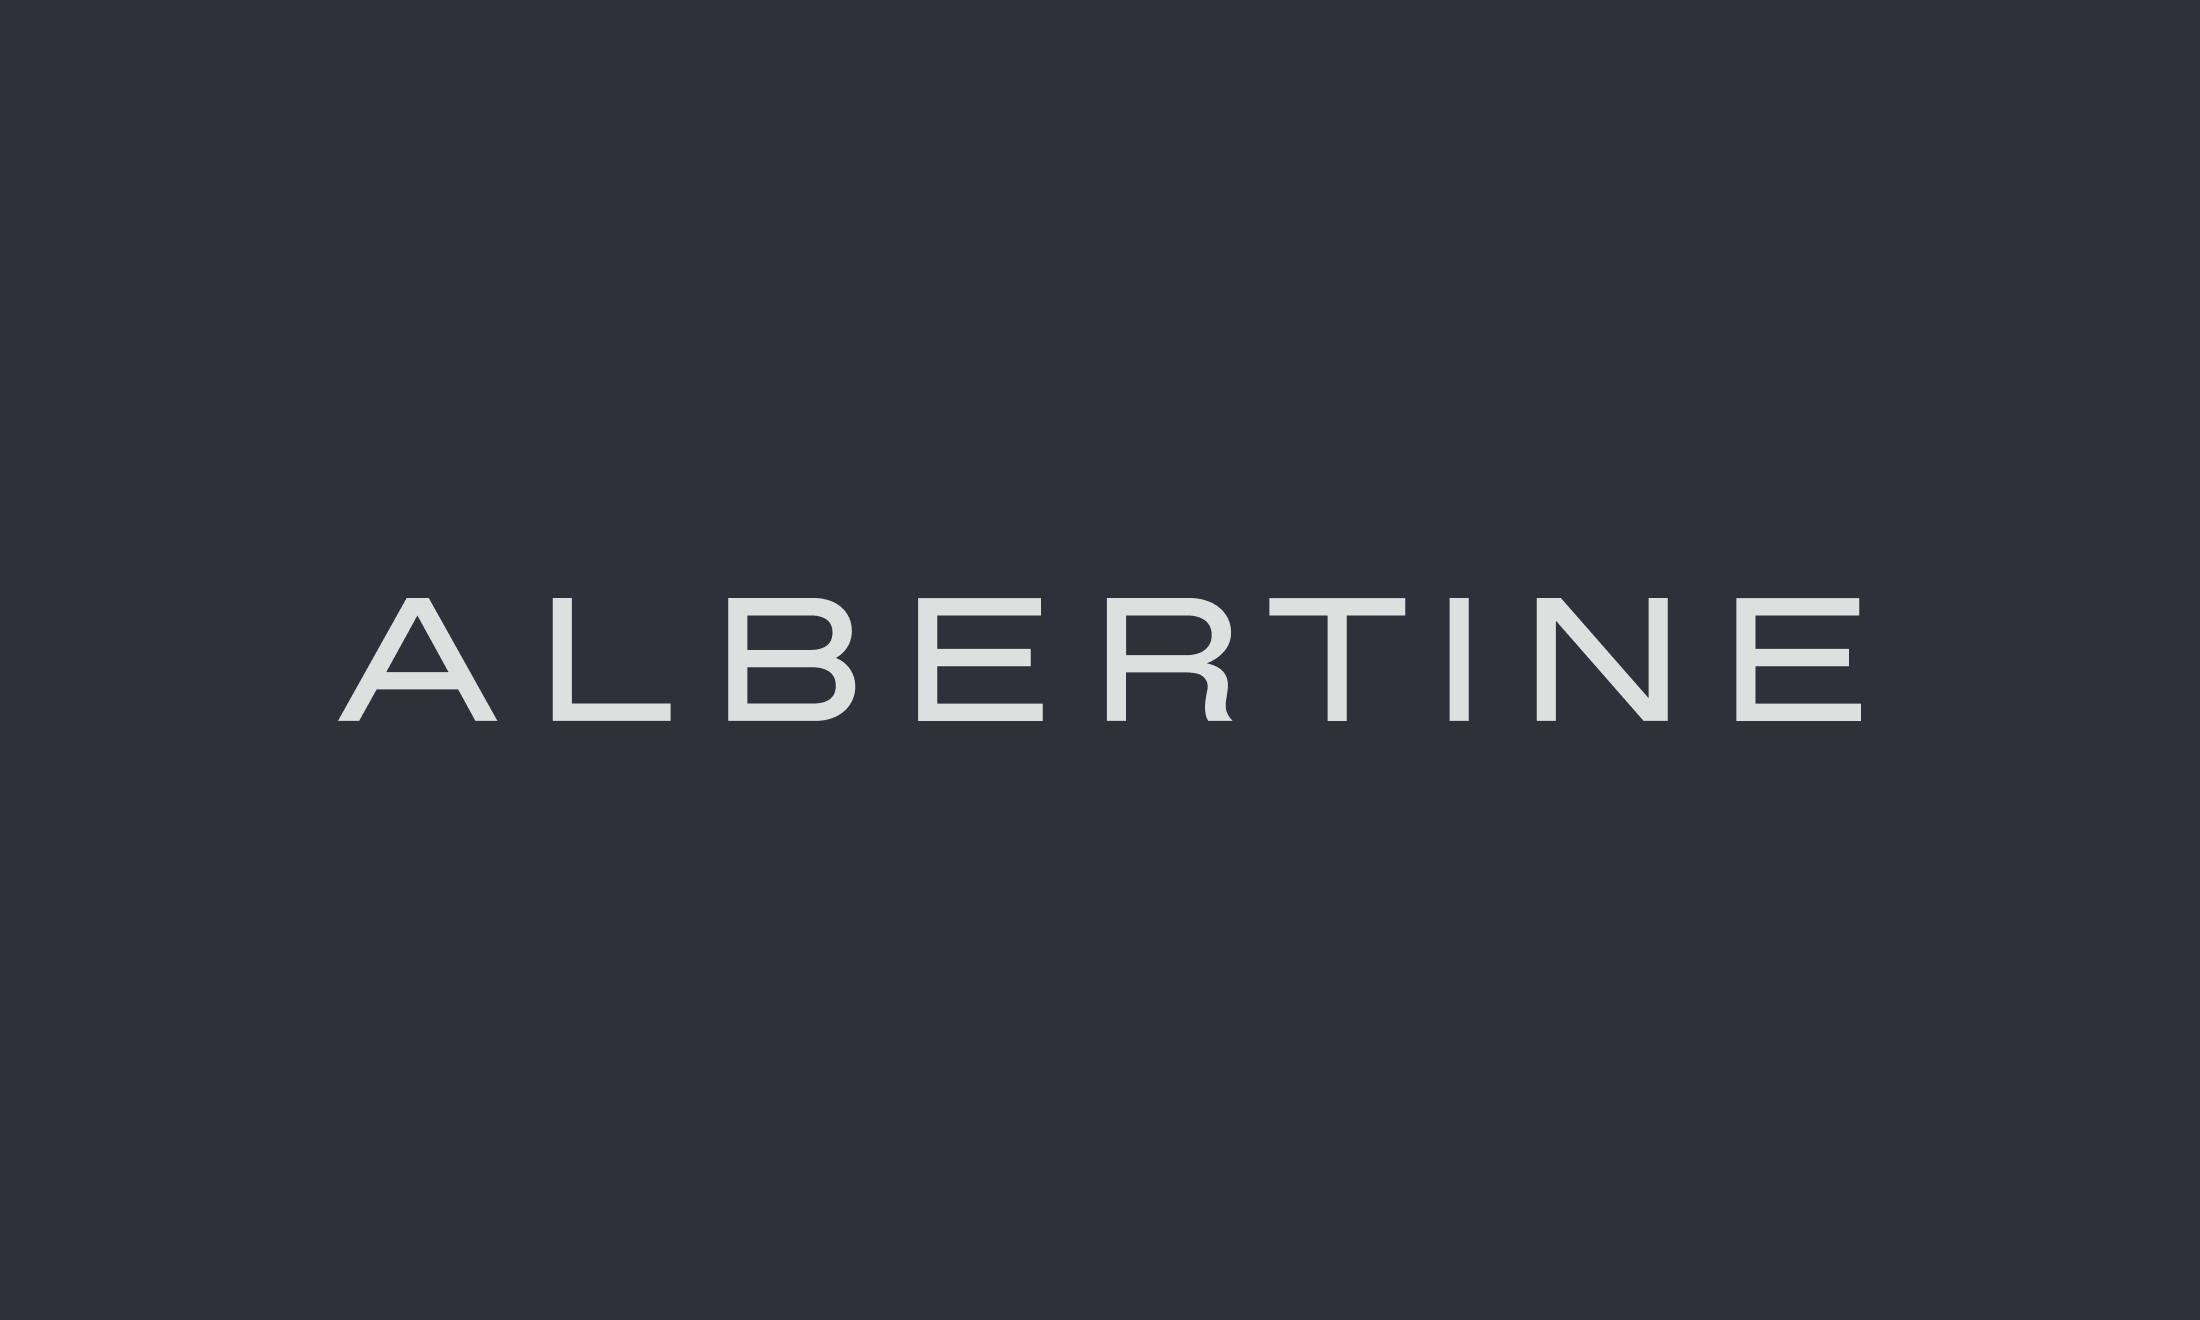 Albertine brand name developed by Proxy